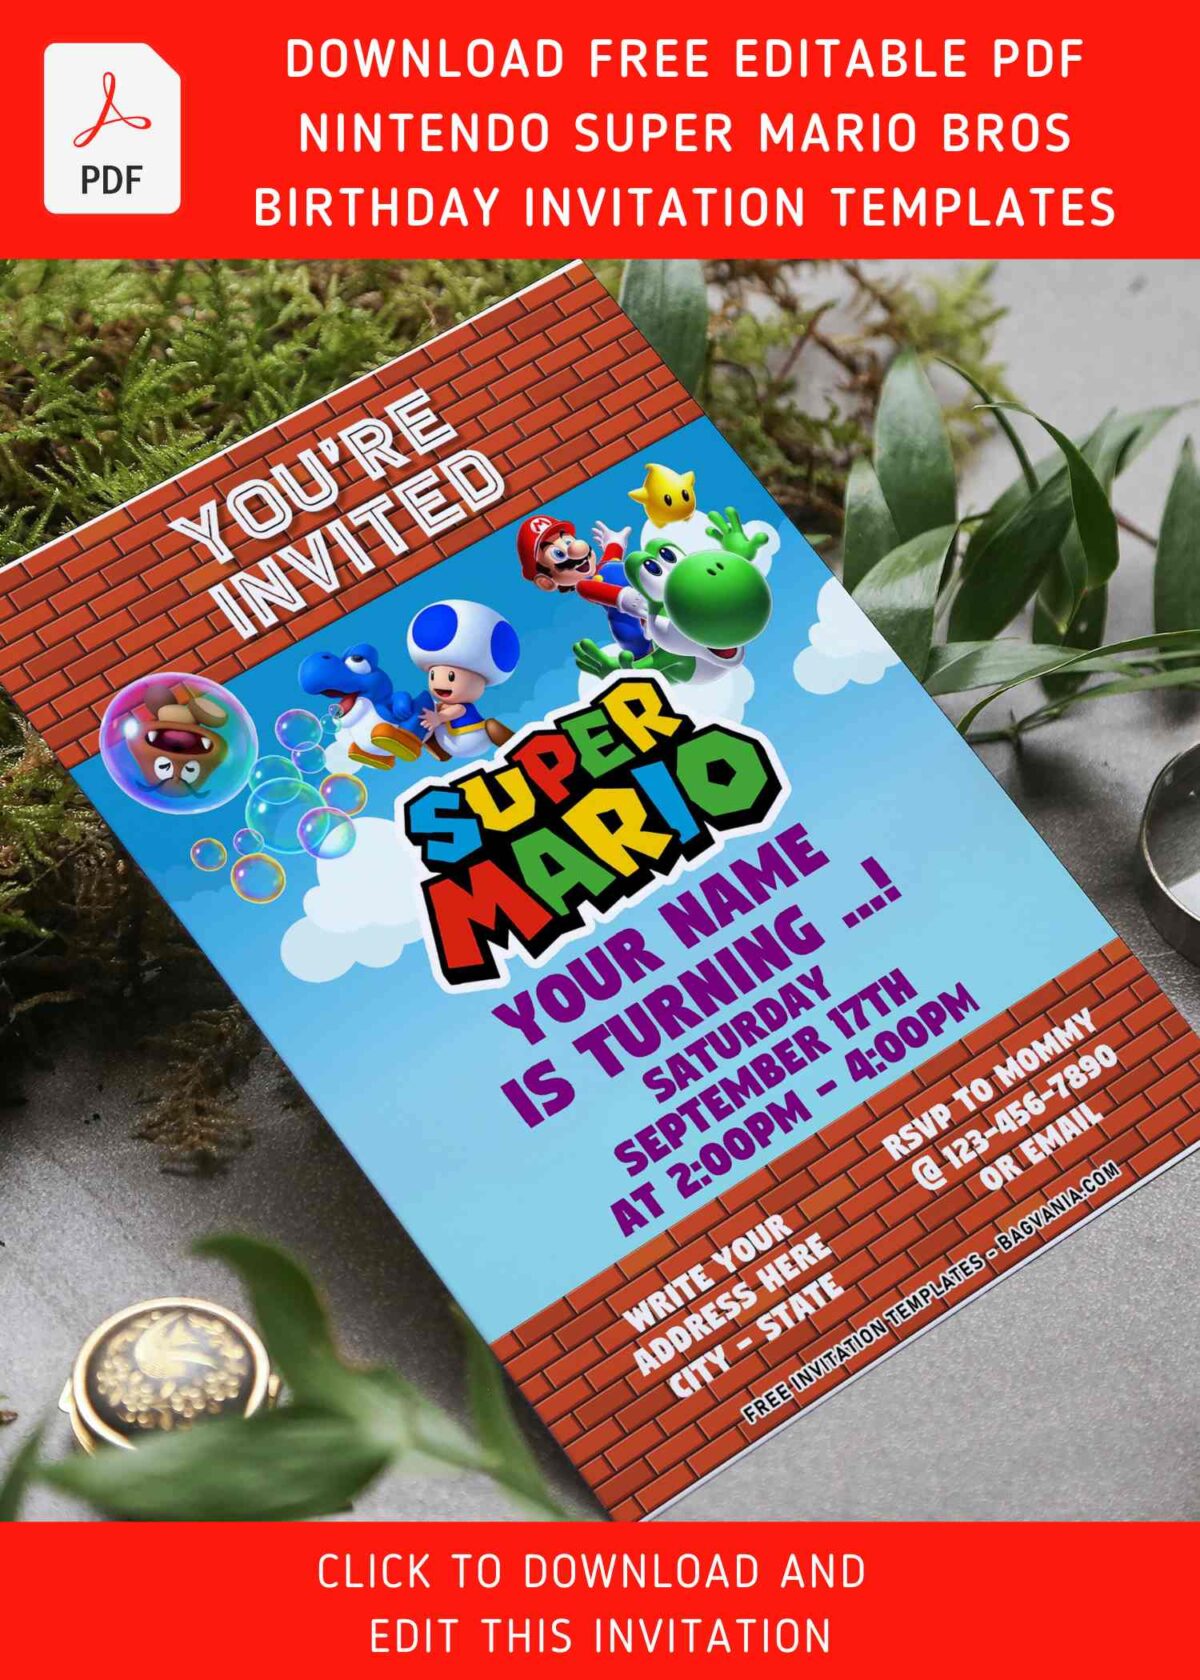 (Free Editable PDF) Super Mario Bros Sunshine Birthday Invitation Templates with Toad